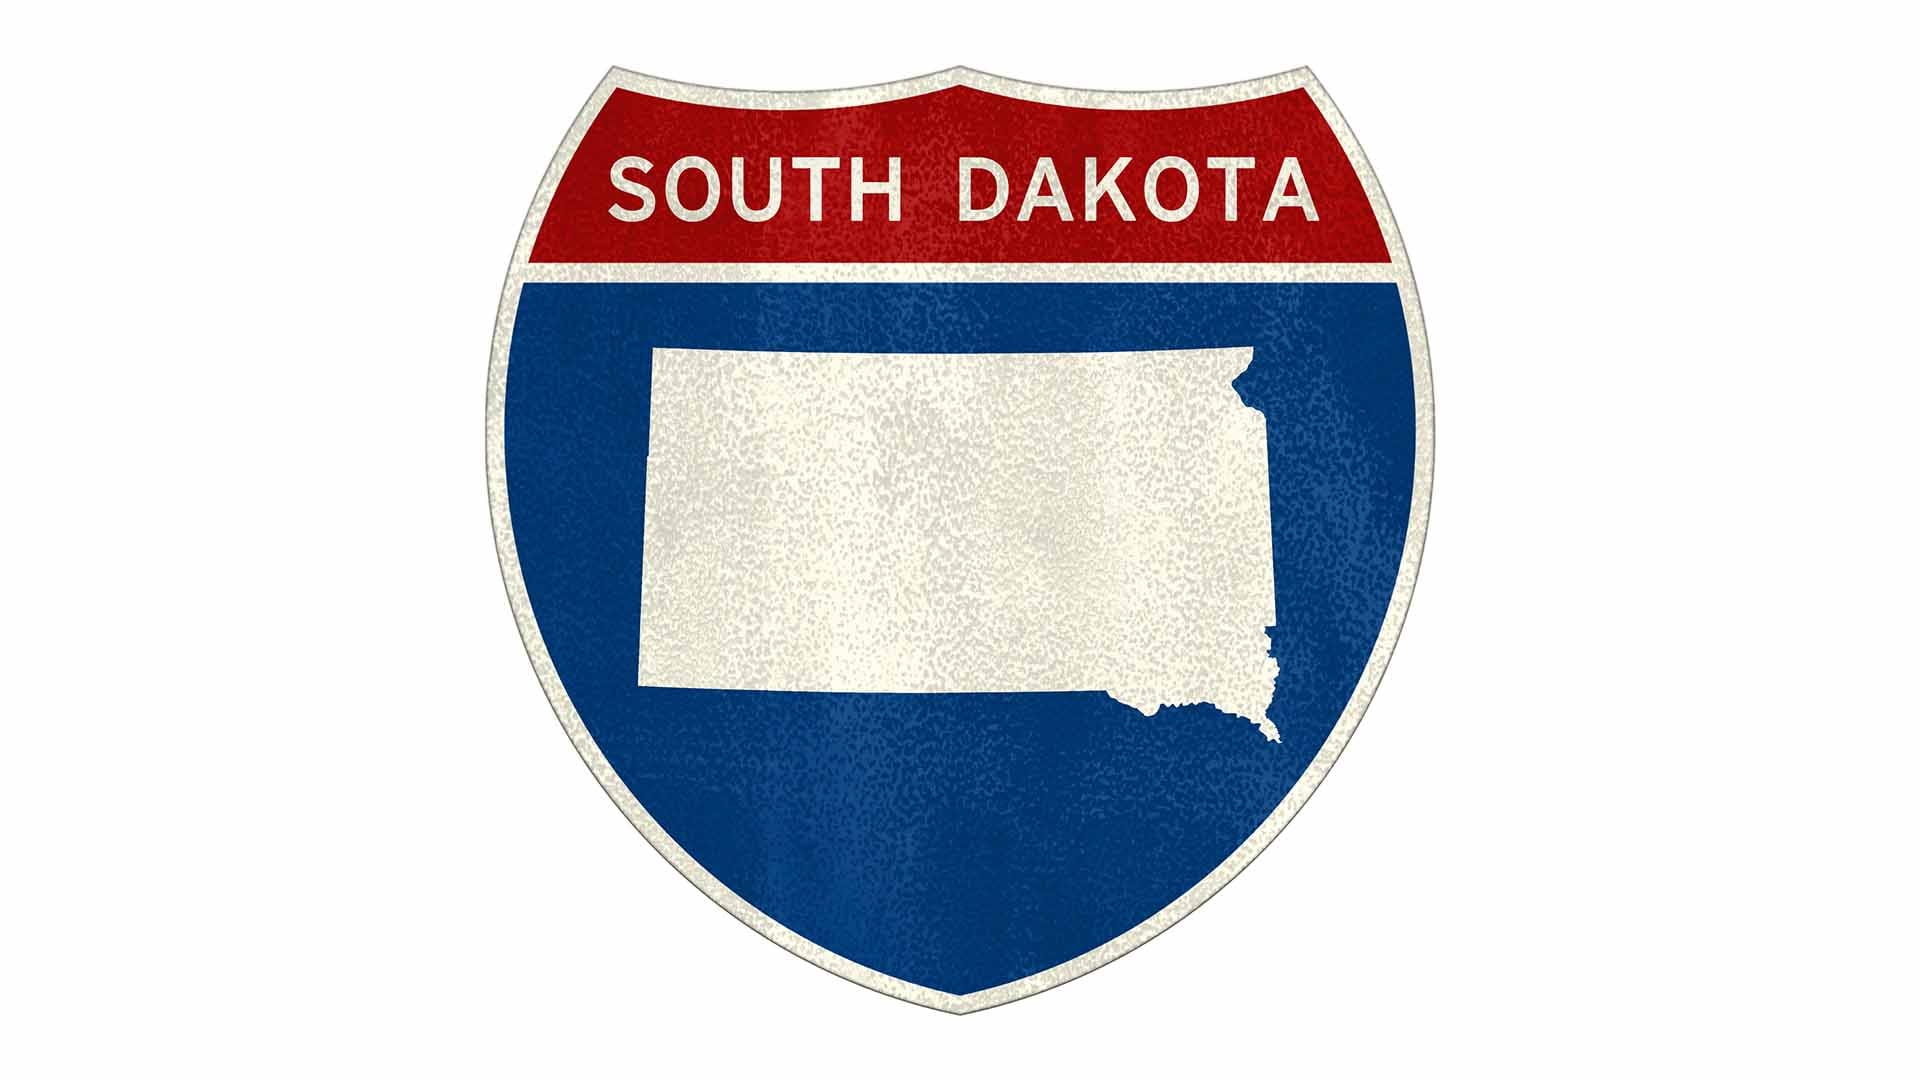 South Dakota state roadside sign